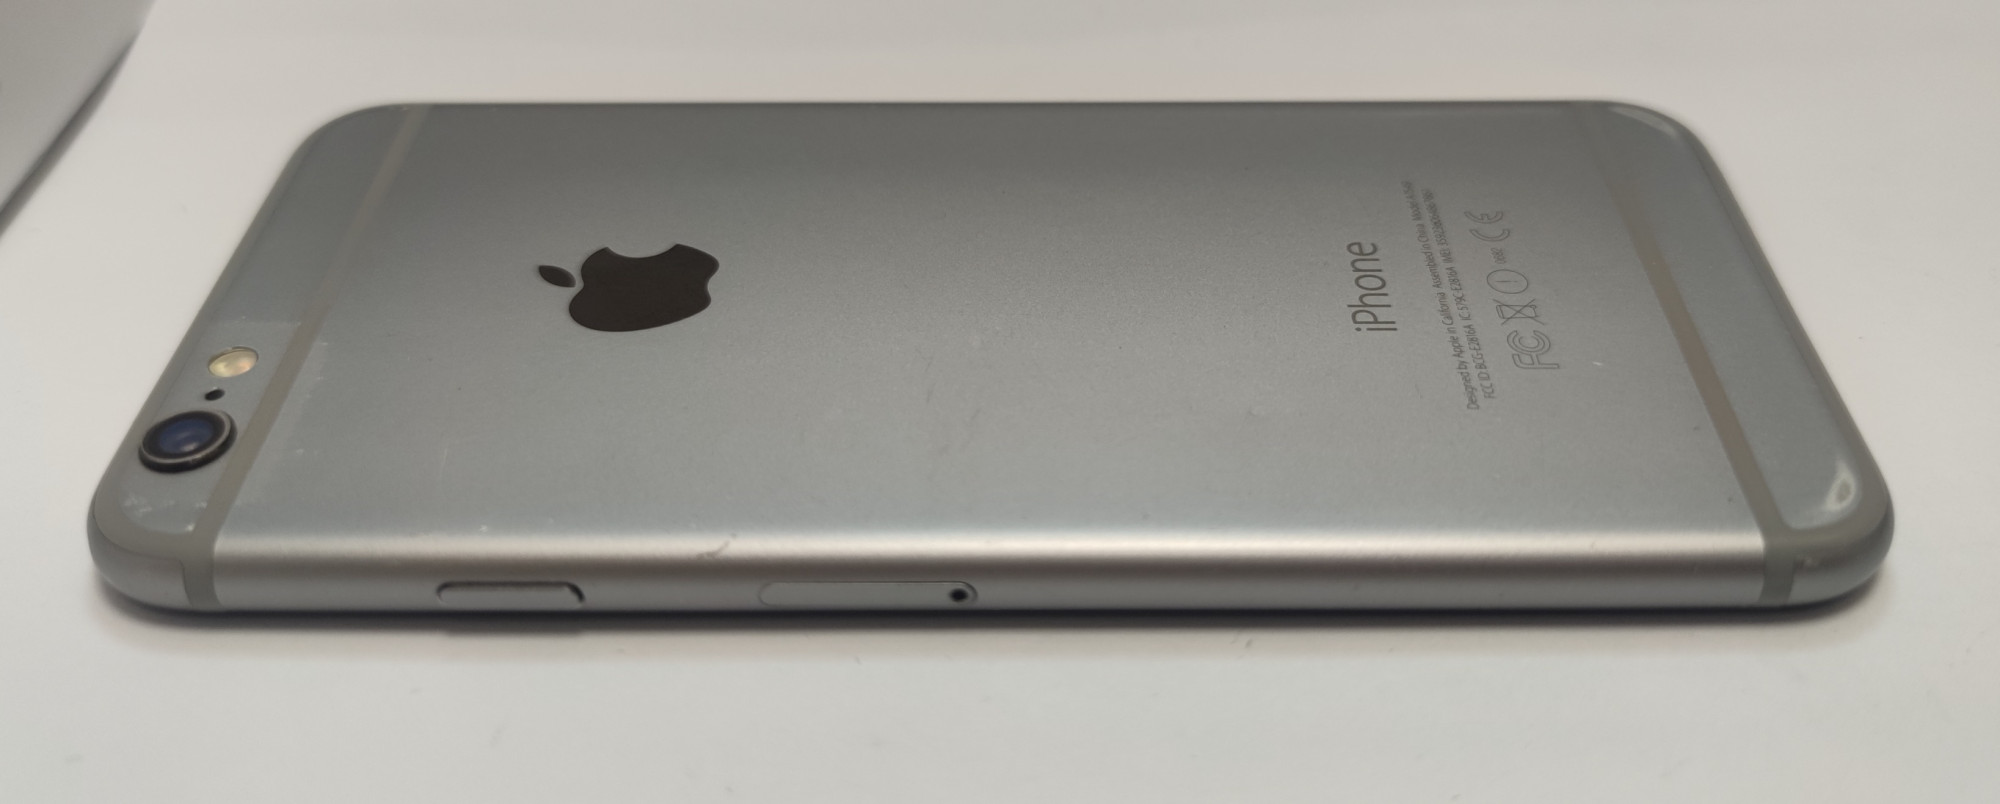 Apple iPhone 6 64Gb Space Gray 1